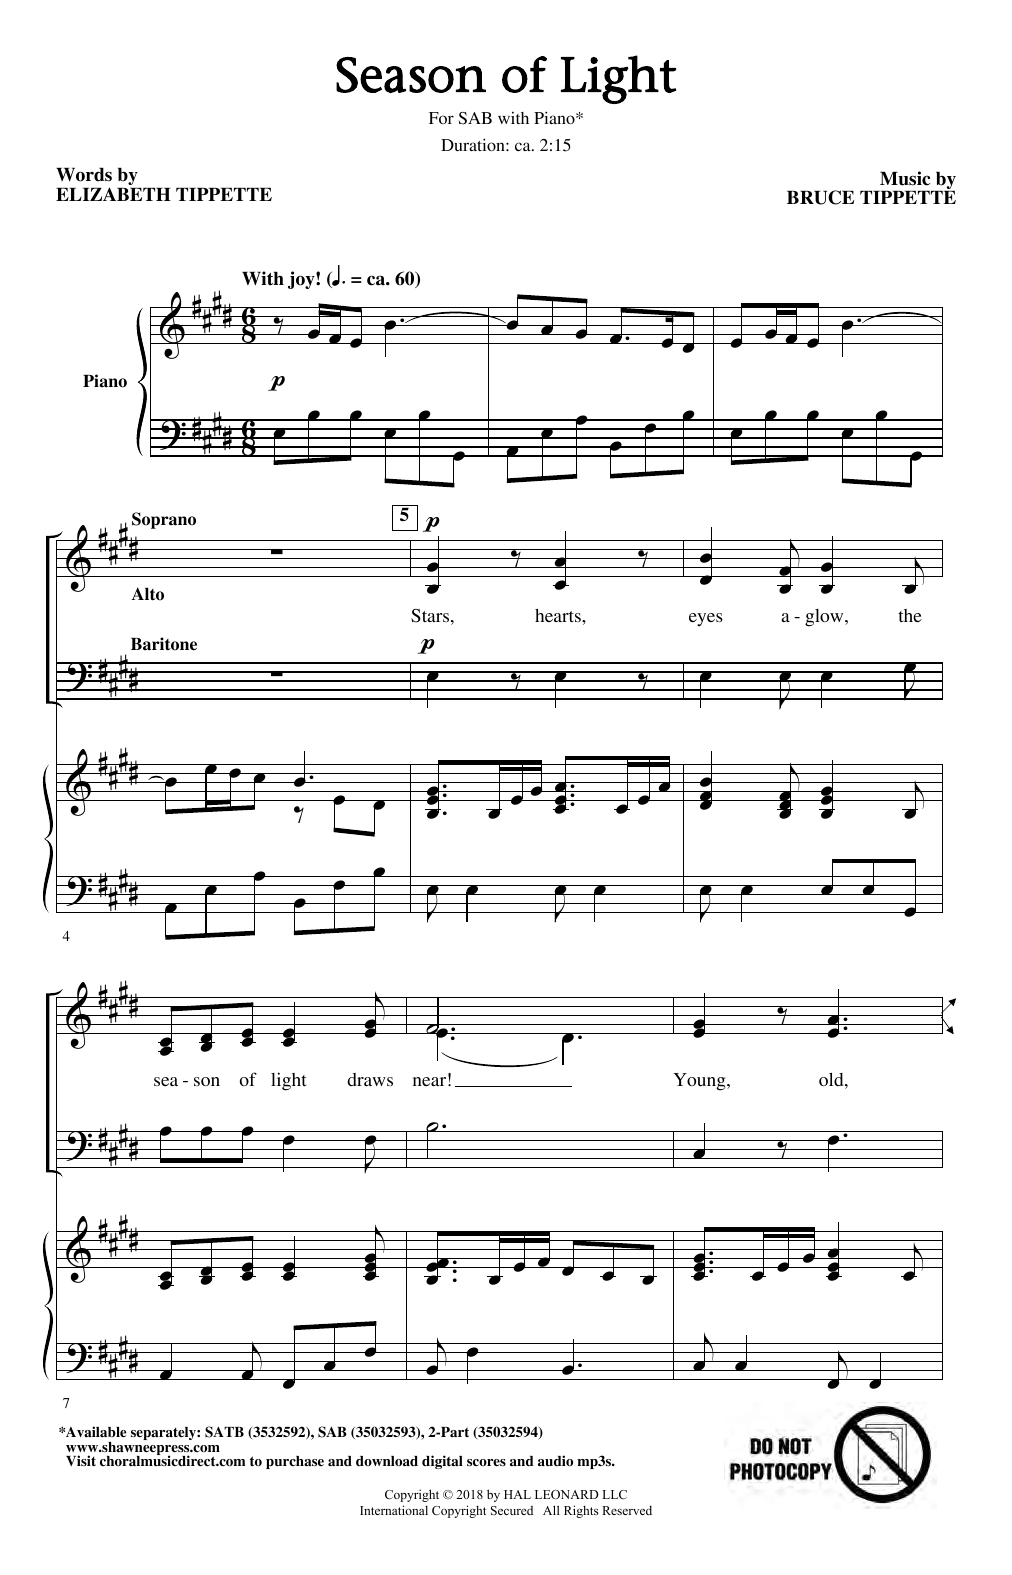 Bruce Tippette & Elizabeth Tippette Season Of Light Sheet Music Notes & Chords for 2-Part Choir - Download or Print PDF